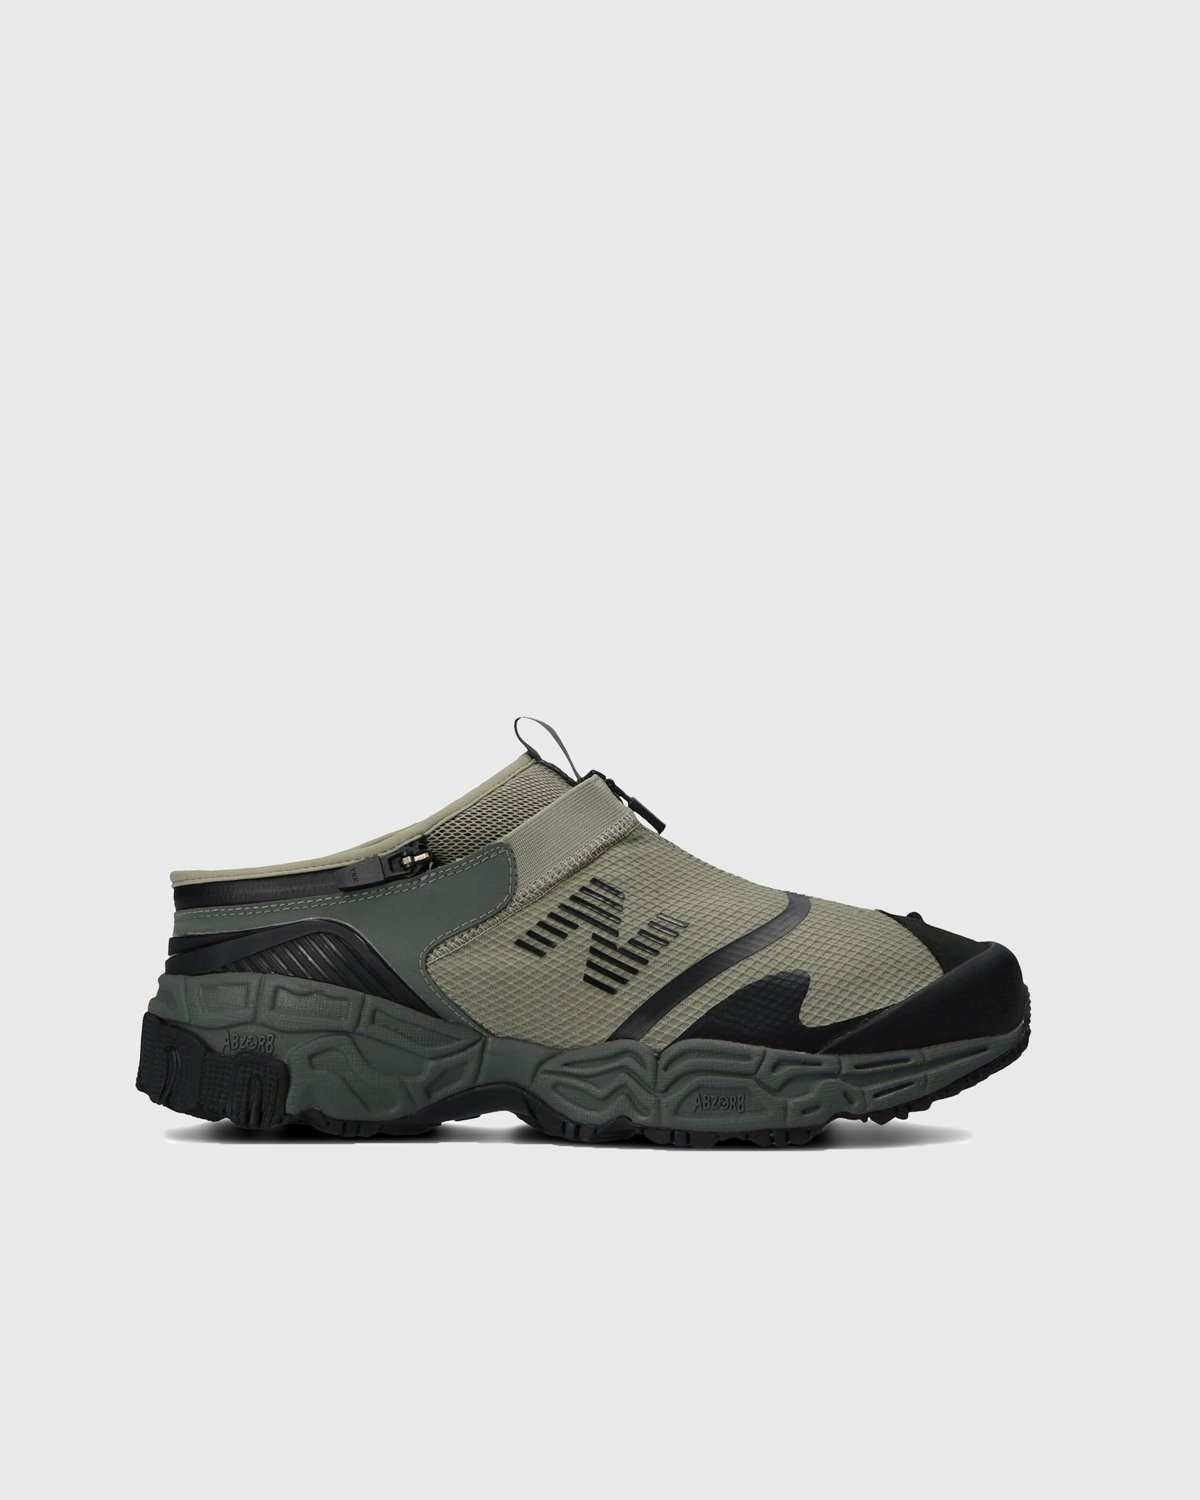 New Balance x Snow Peak – Niobium Beige/Black/Green - Sneakers - Green - Image 3